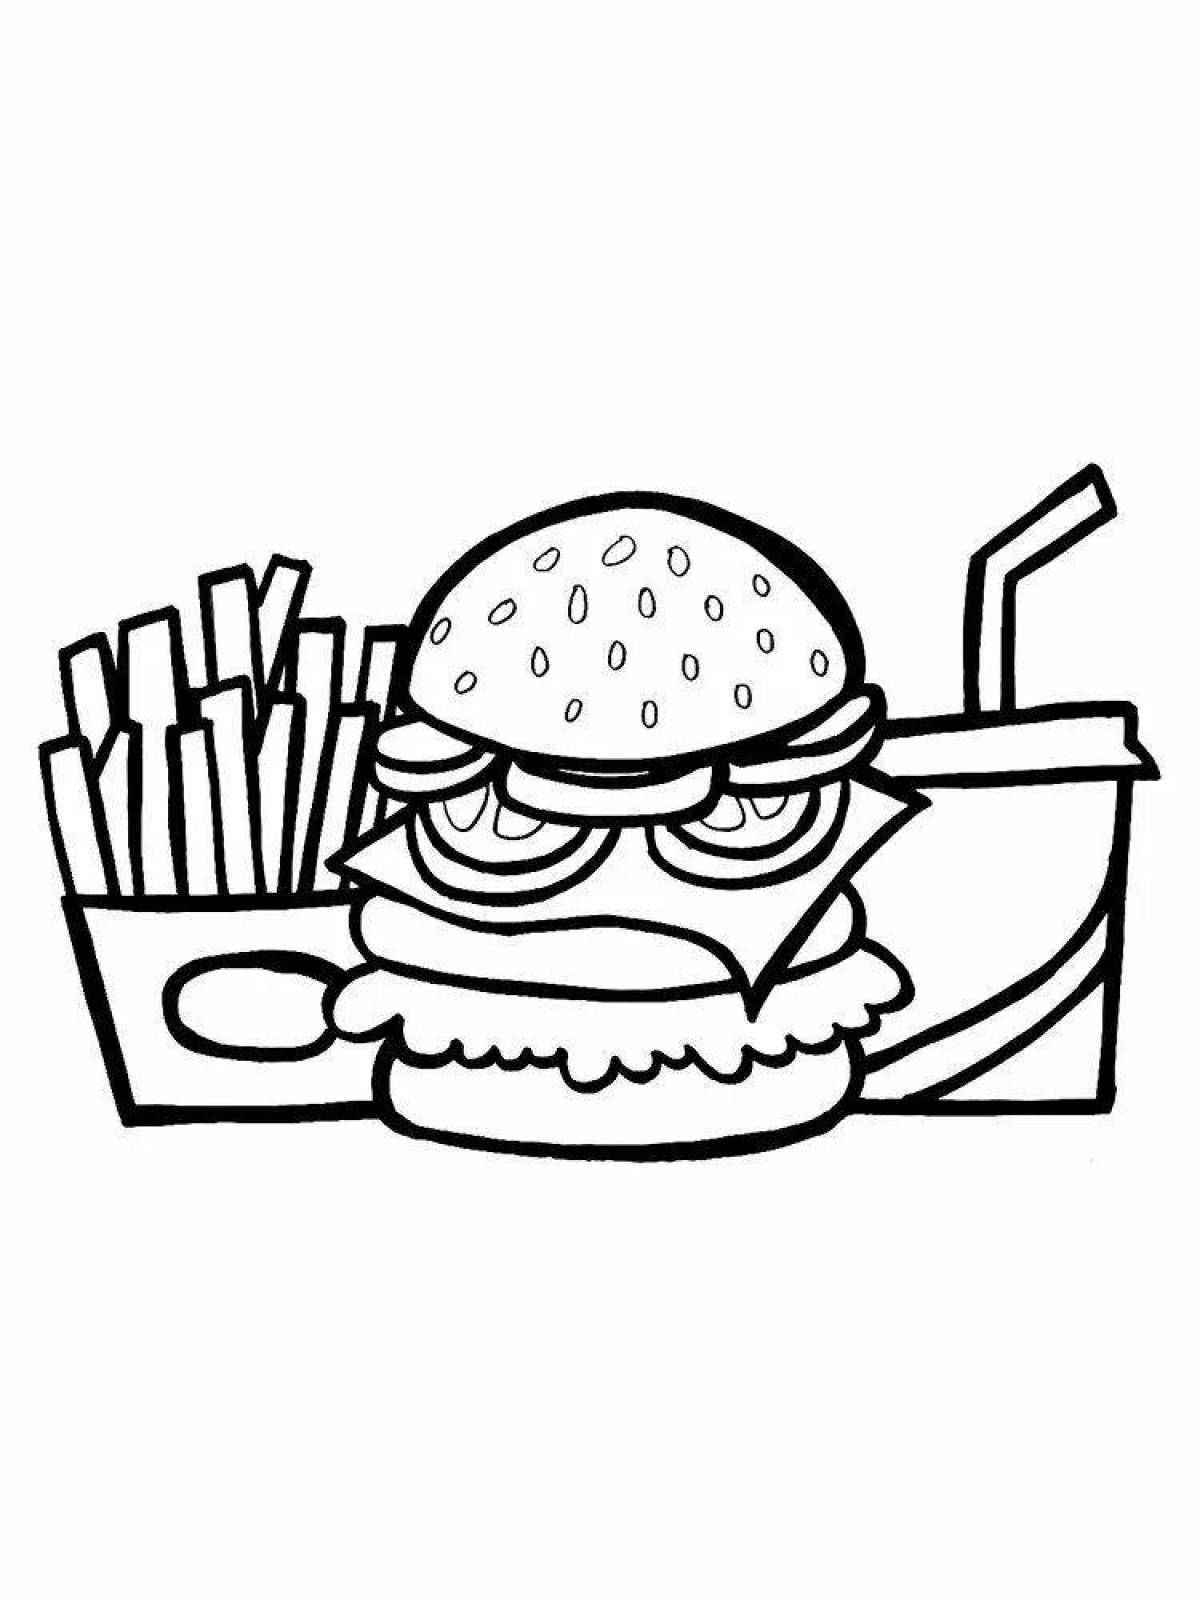 Playful burger king coloring page